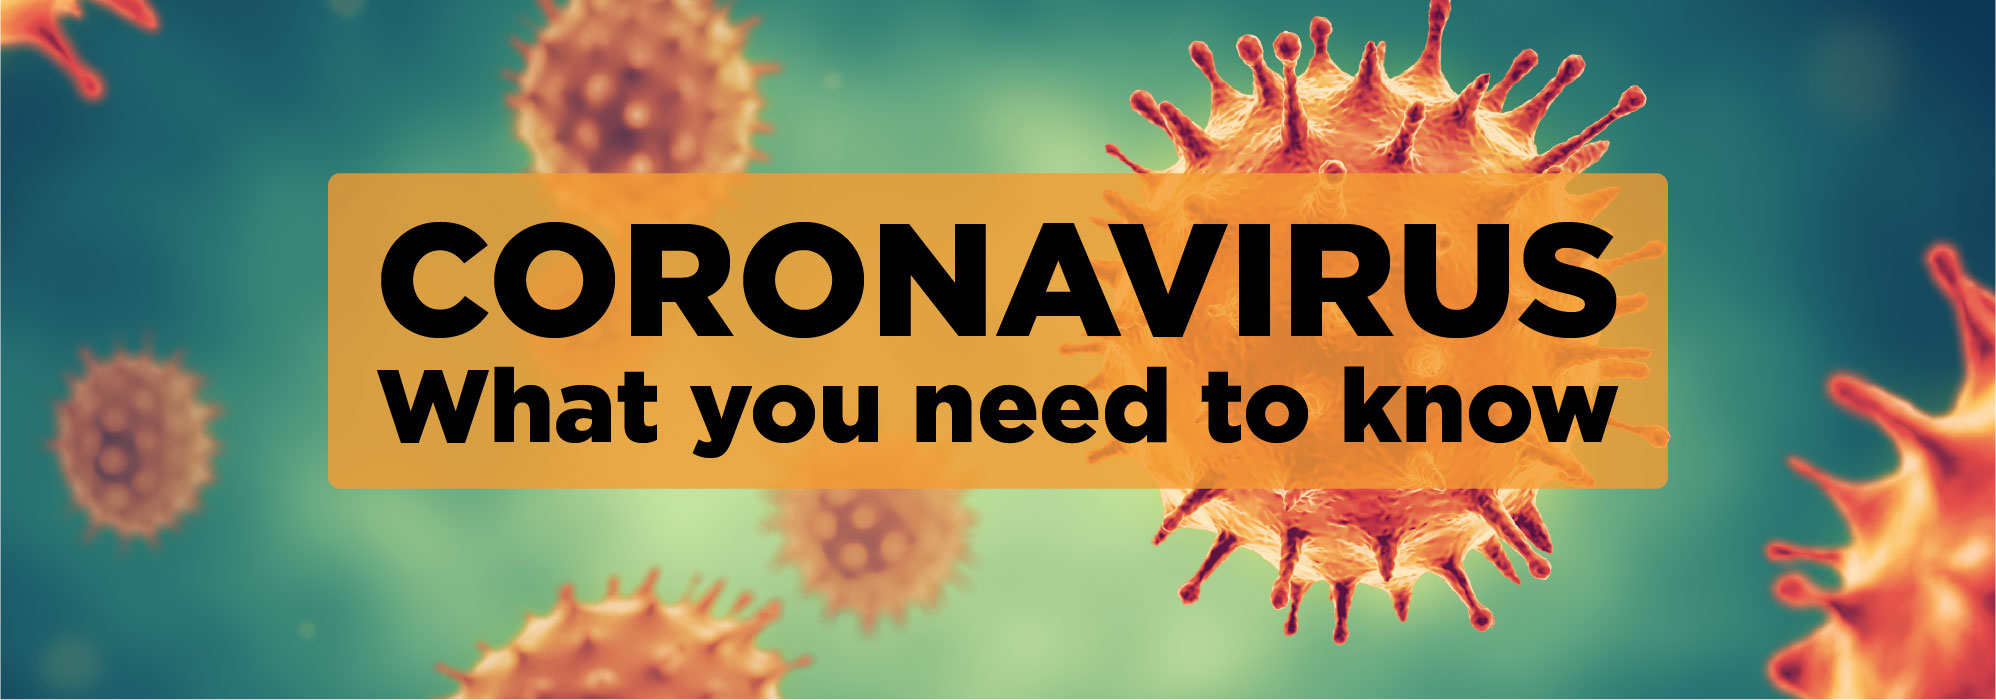 Coronavirus - What you need to know